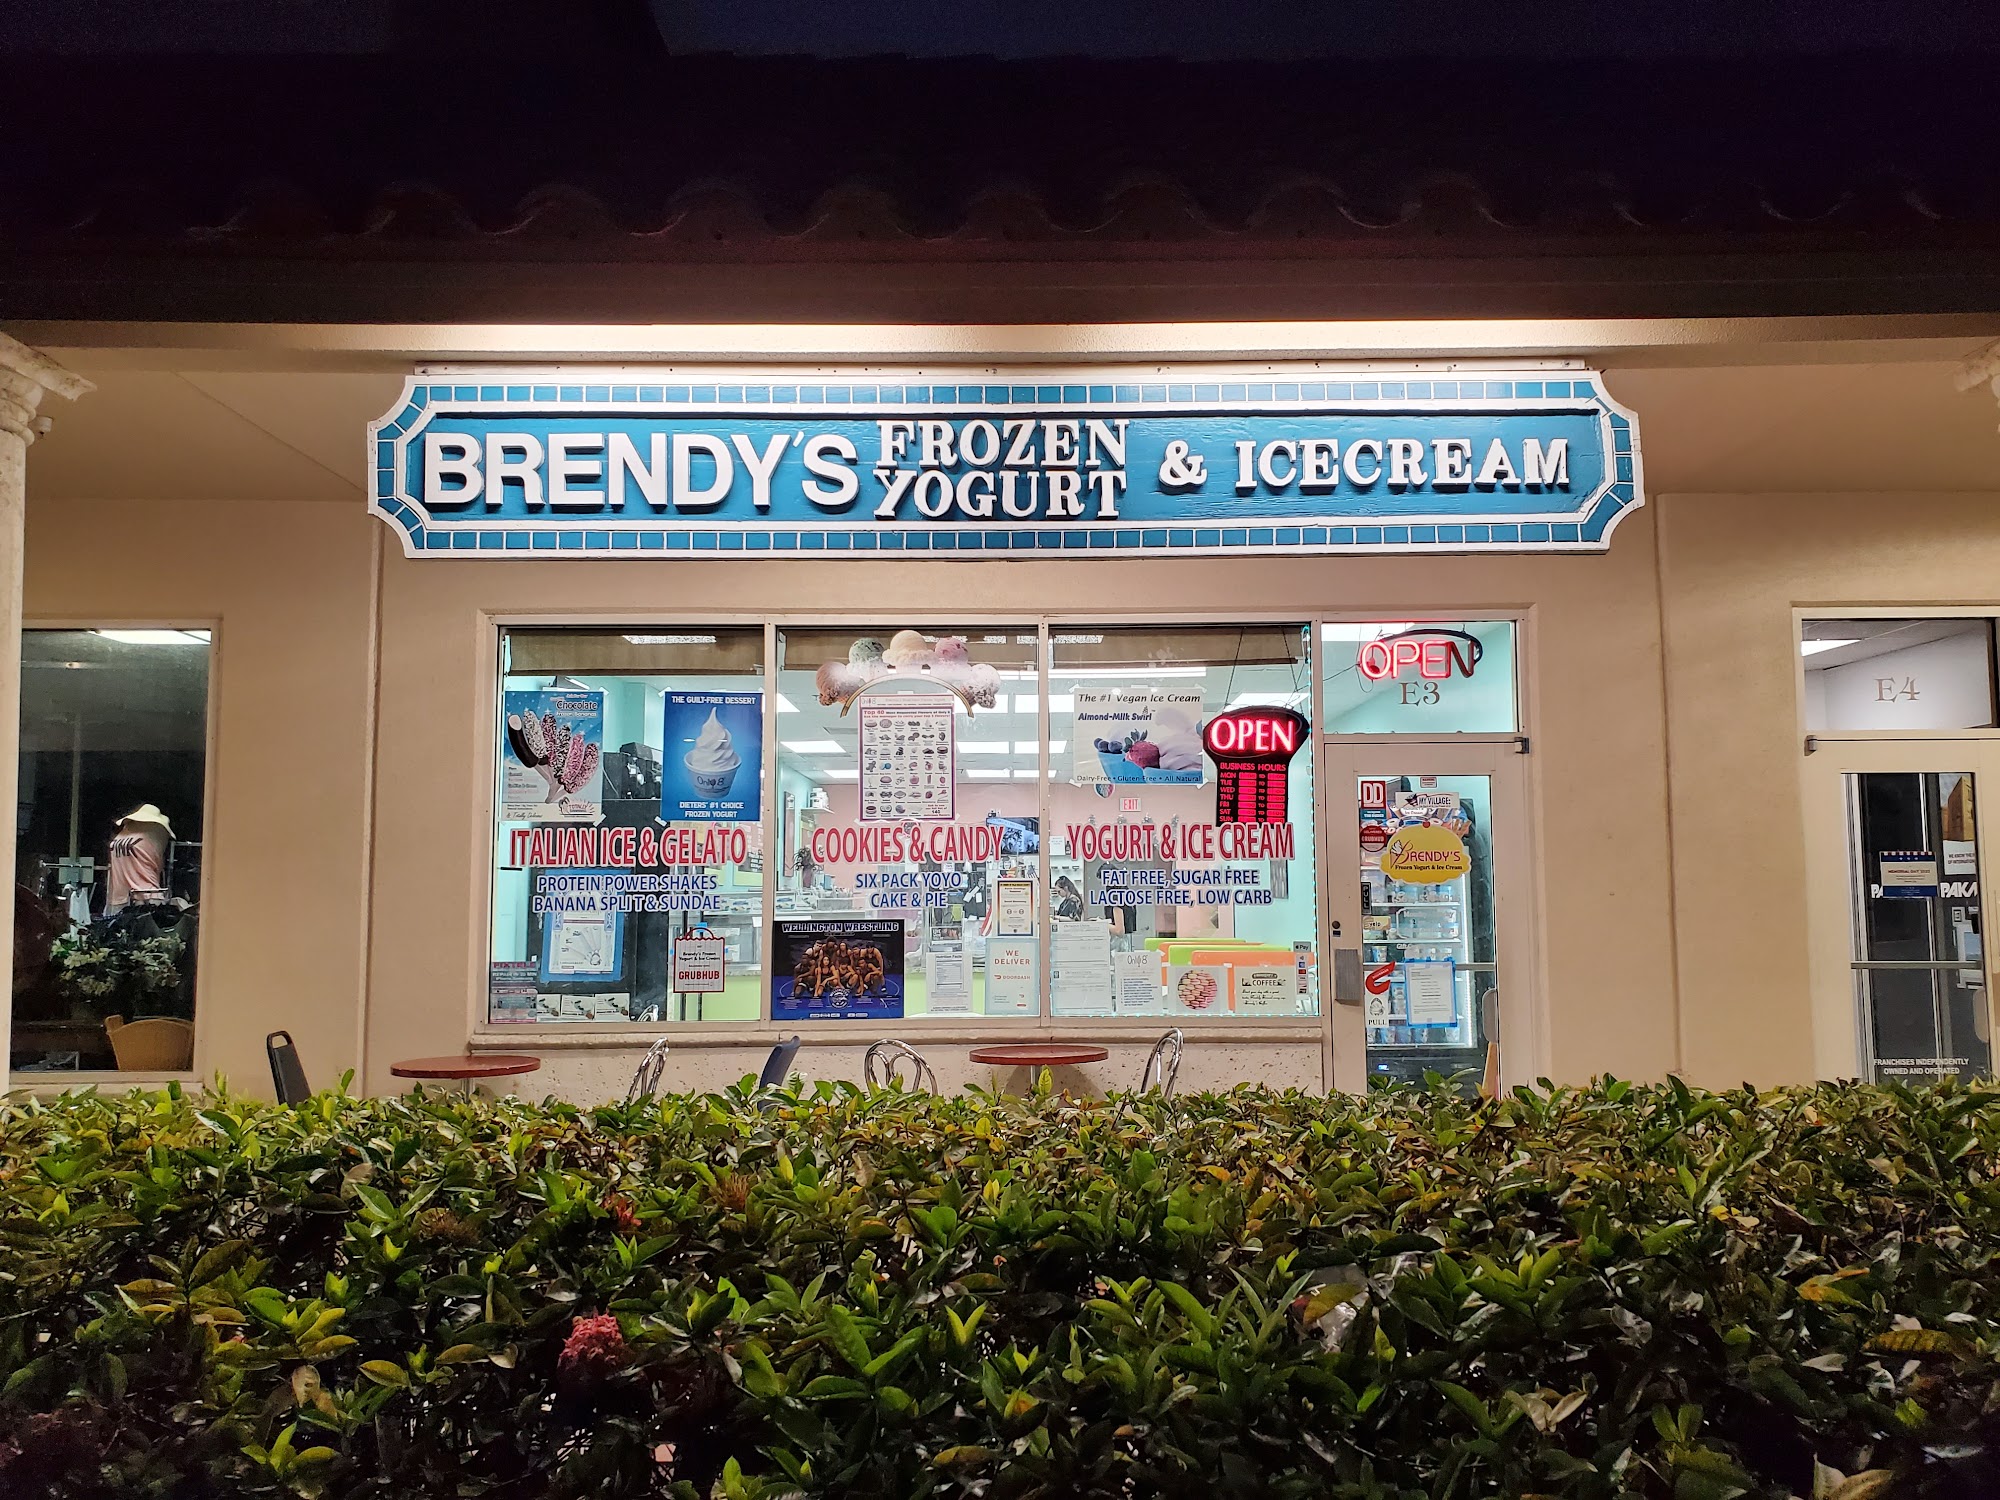 BRENDY'S FROZEN YOGURT & ICE CREAM